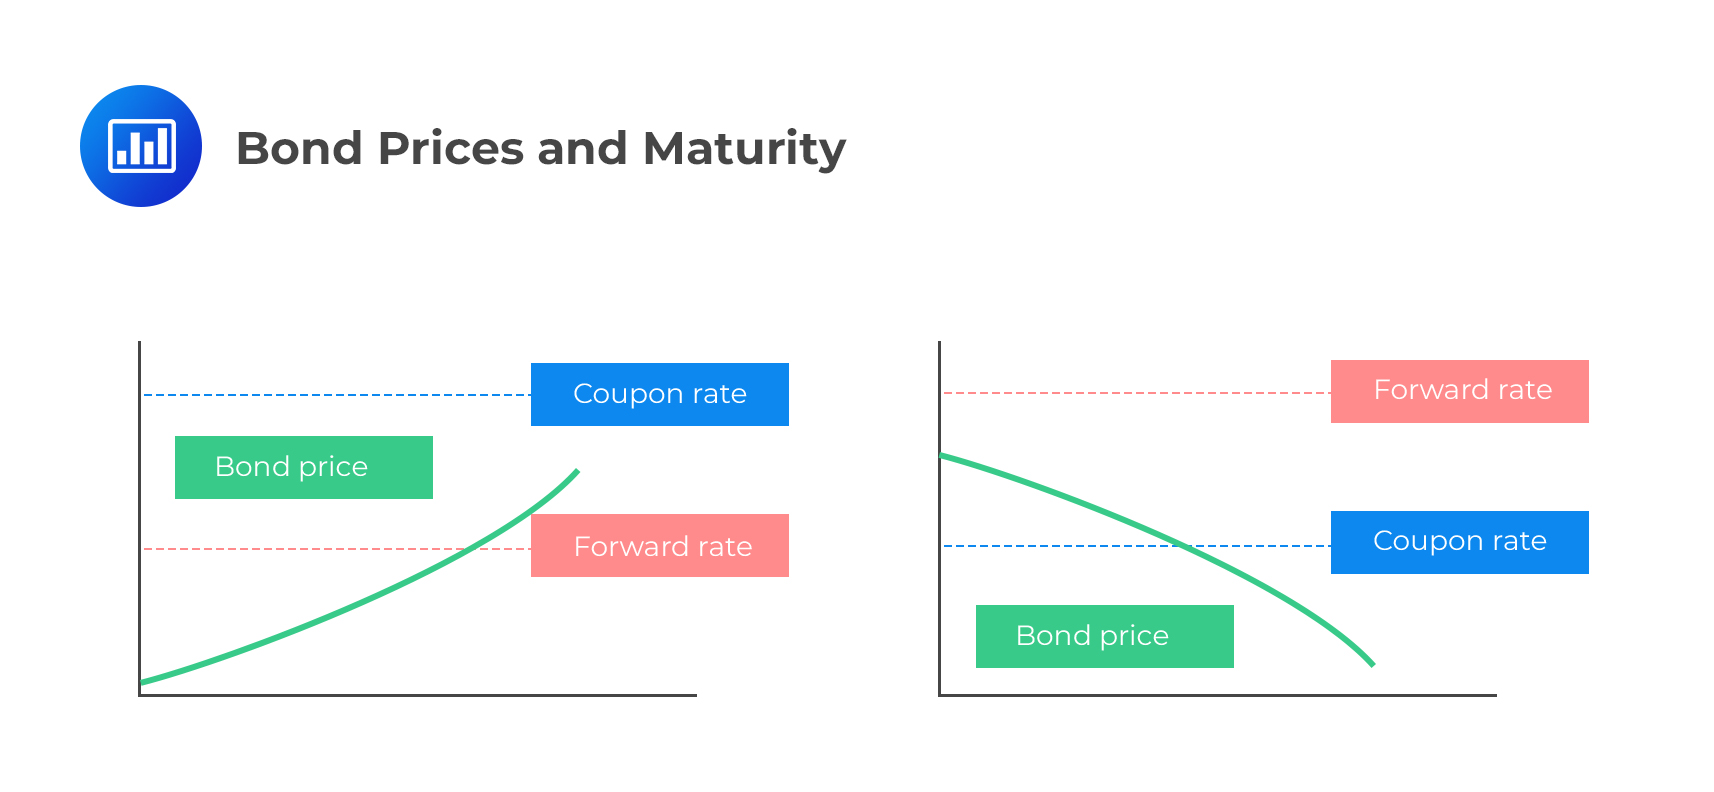 Bond Prices and Maturity